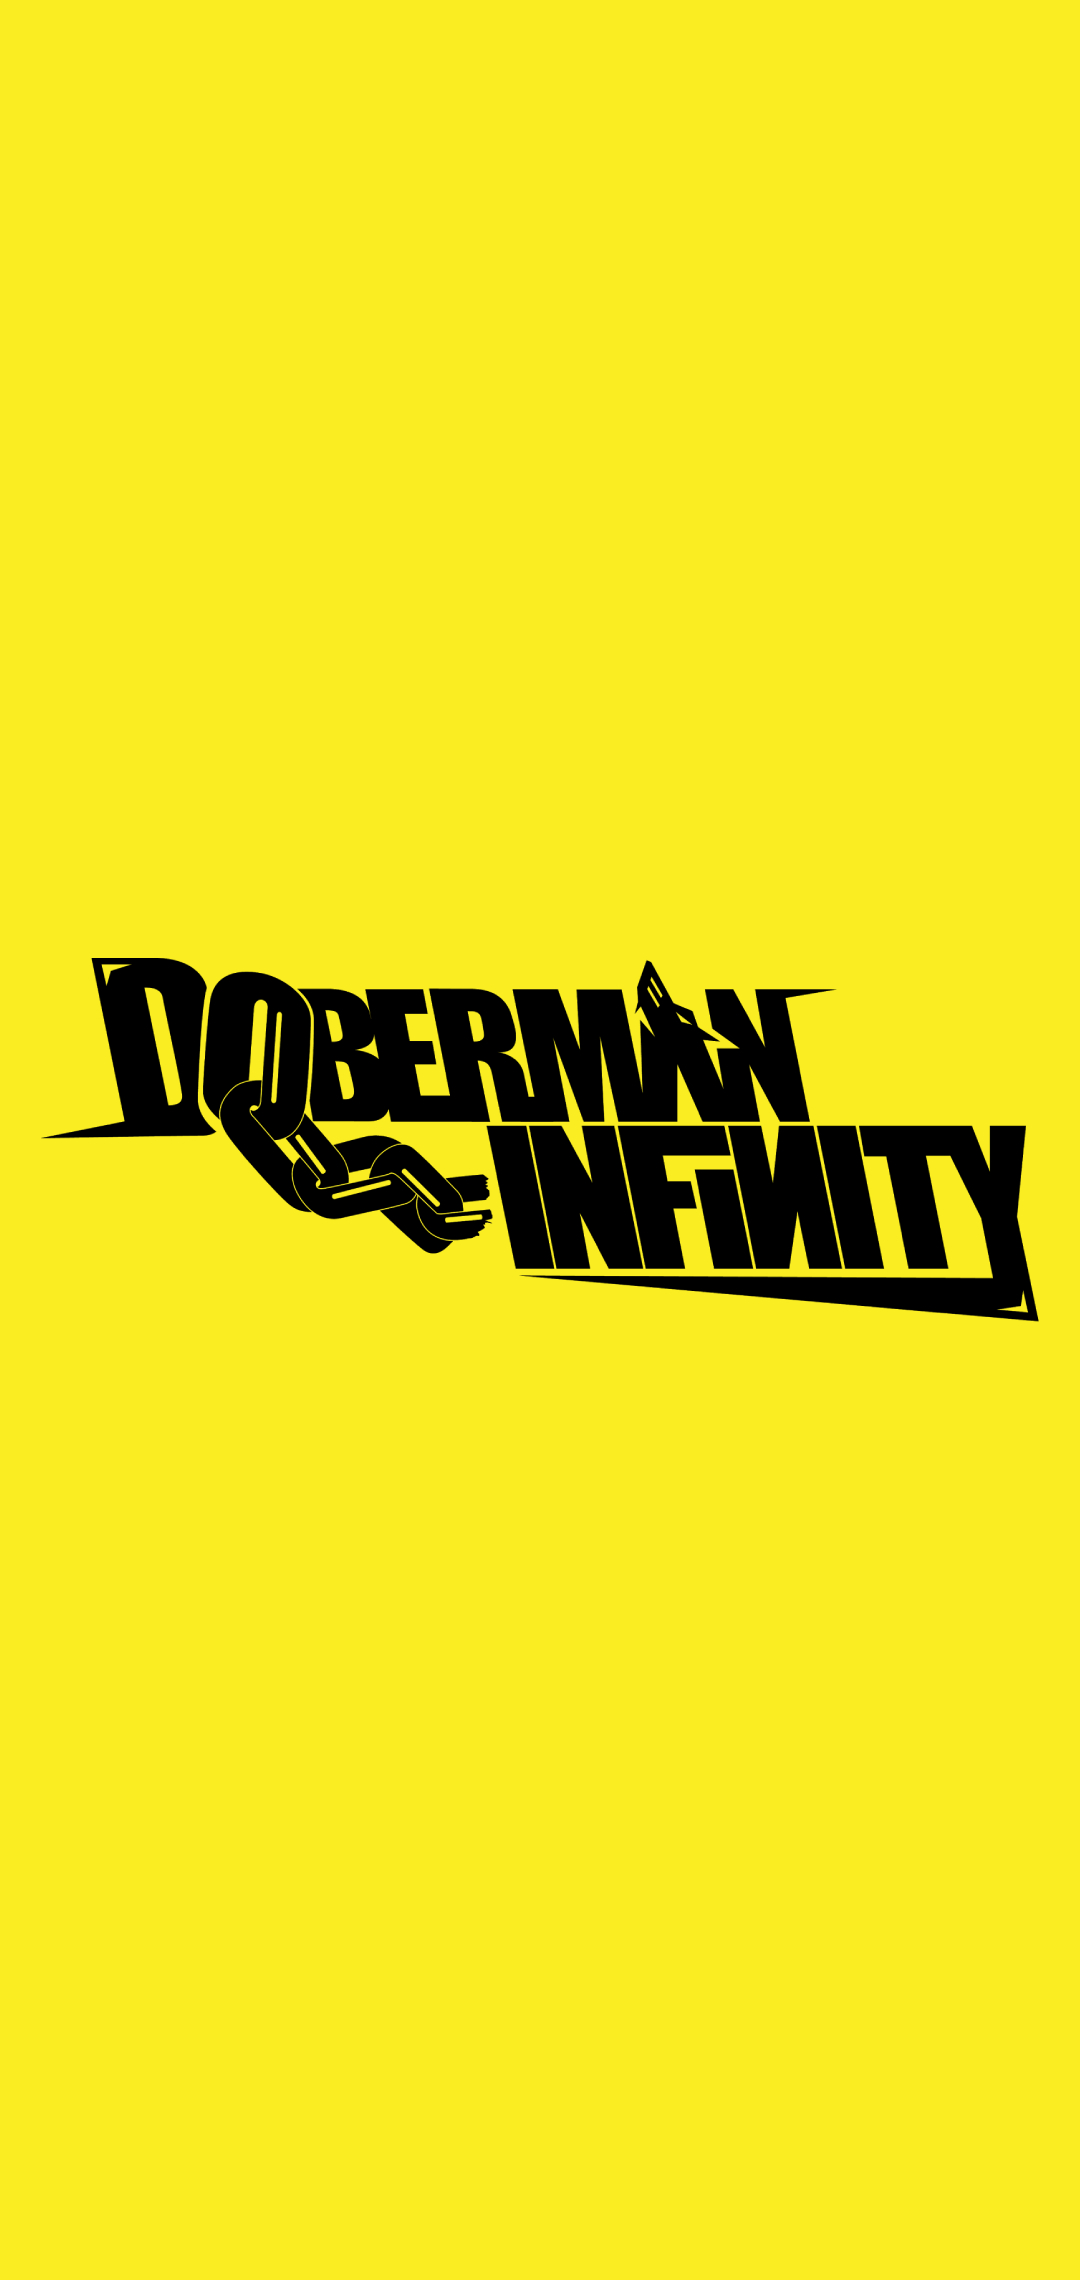 Doberman Infinity ロゴ Aquos R2 Compact スマホ壁紙 待ち受け スマラン